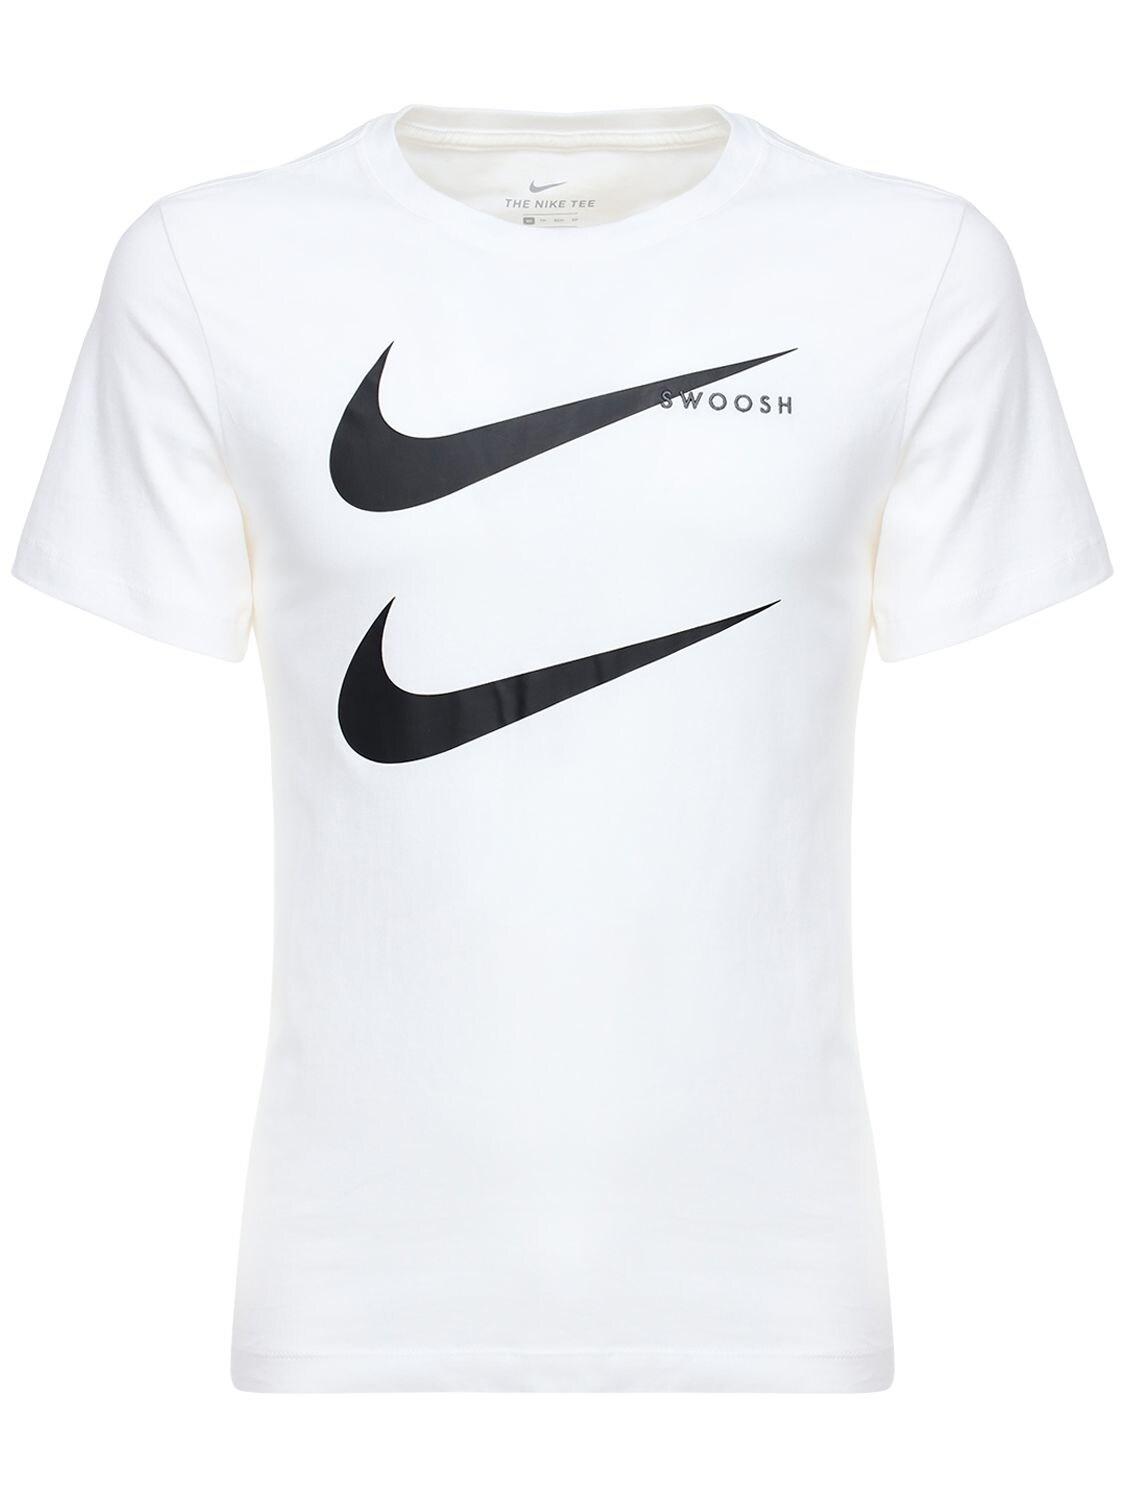 Nike Double Swoosh Cotton T-shirt in 